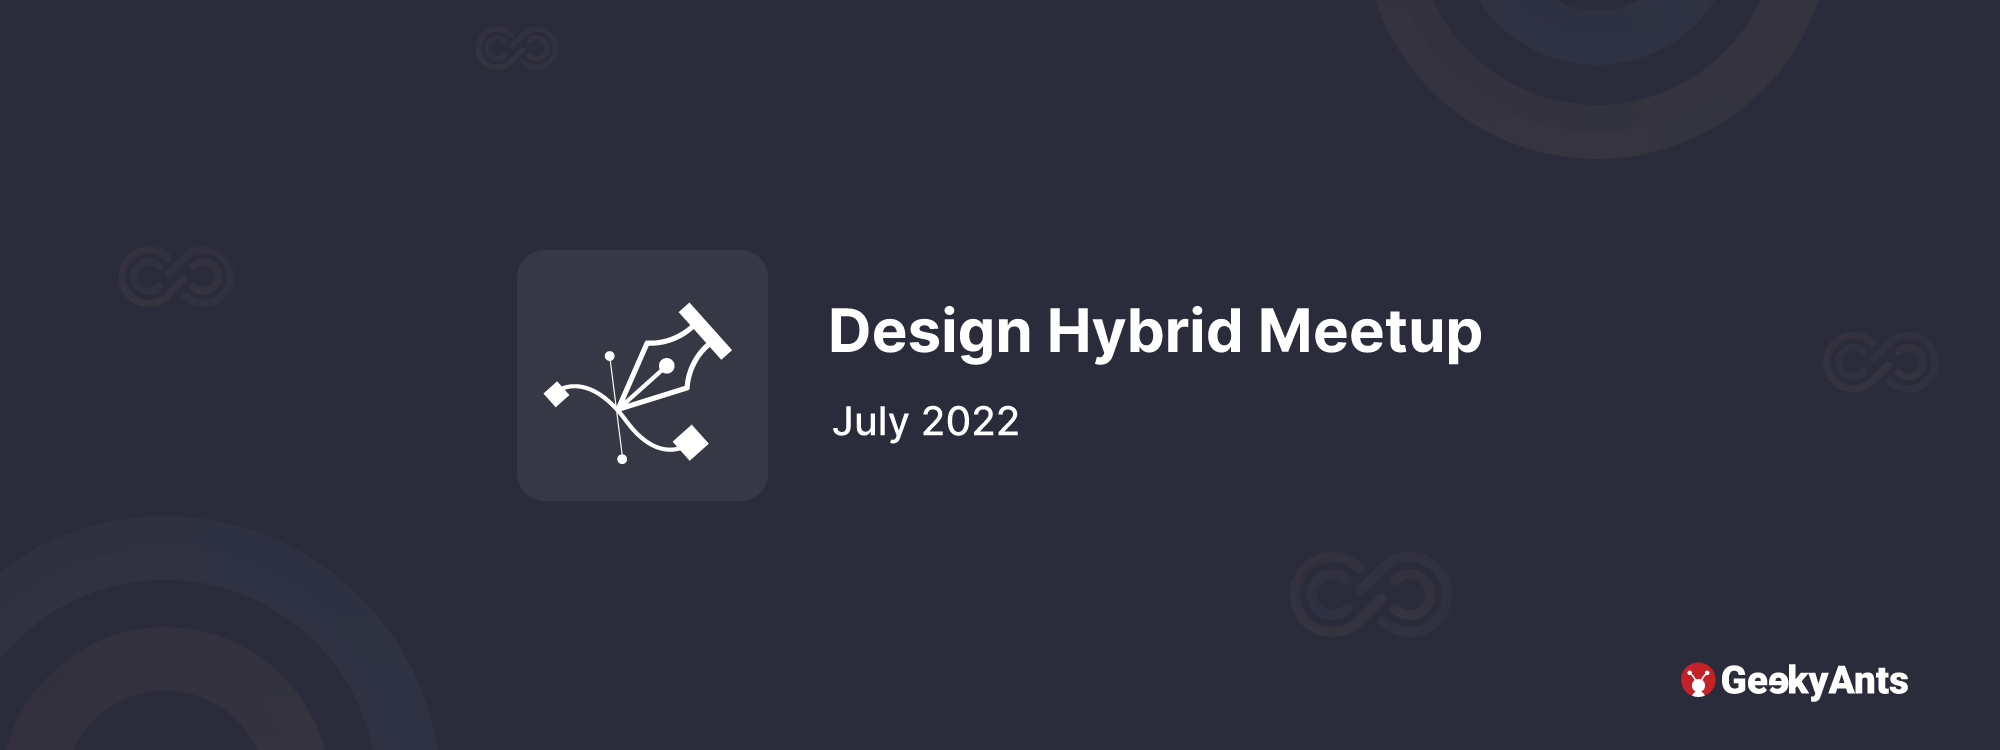 Design Hybrid Meetup: July 2022